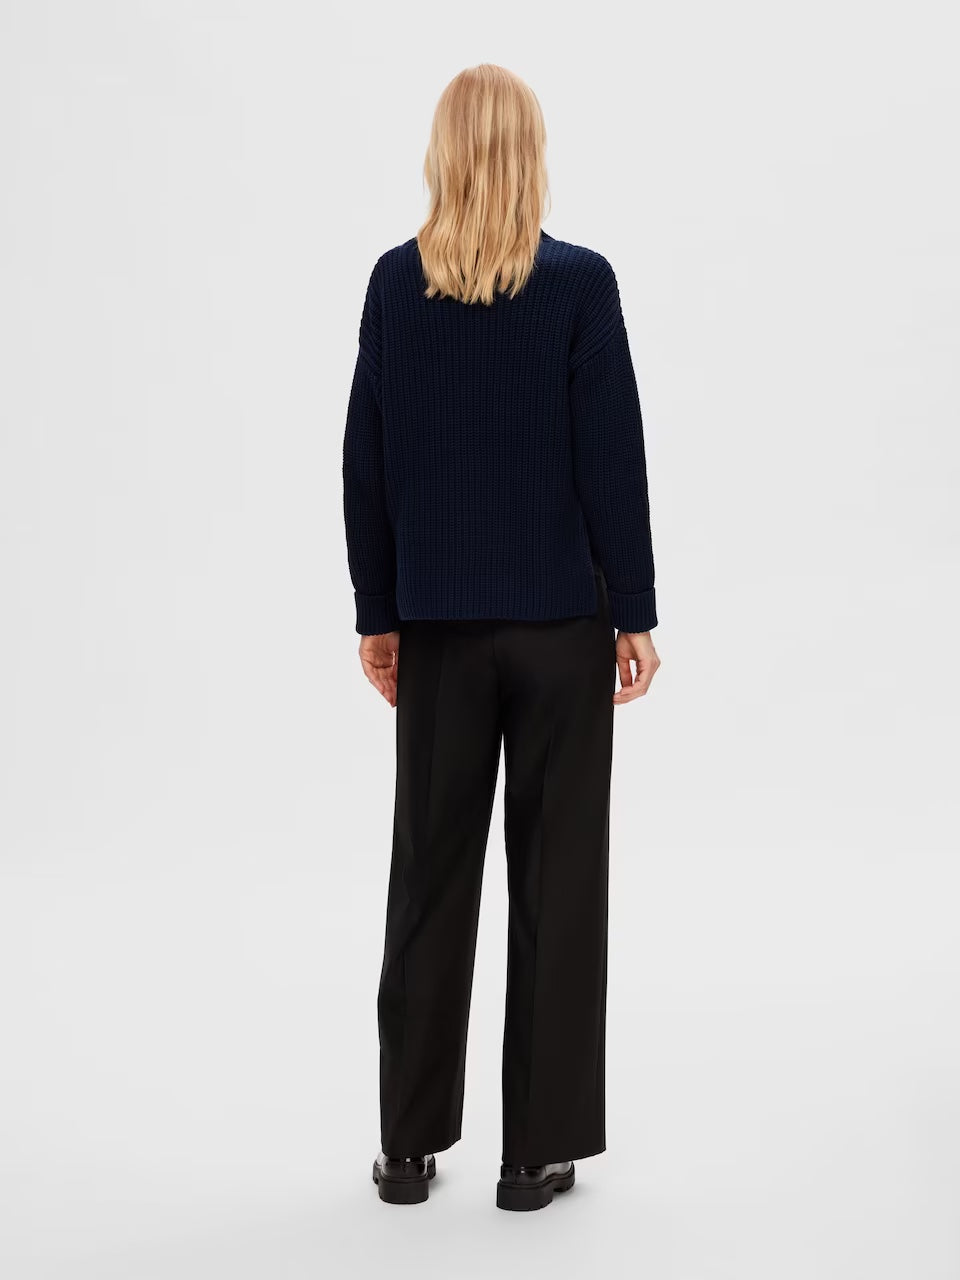 Selected Femme "Selma" Knit Pullover dunkelblau